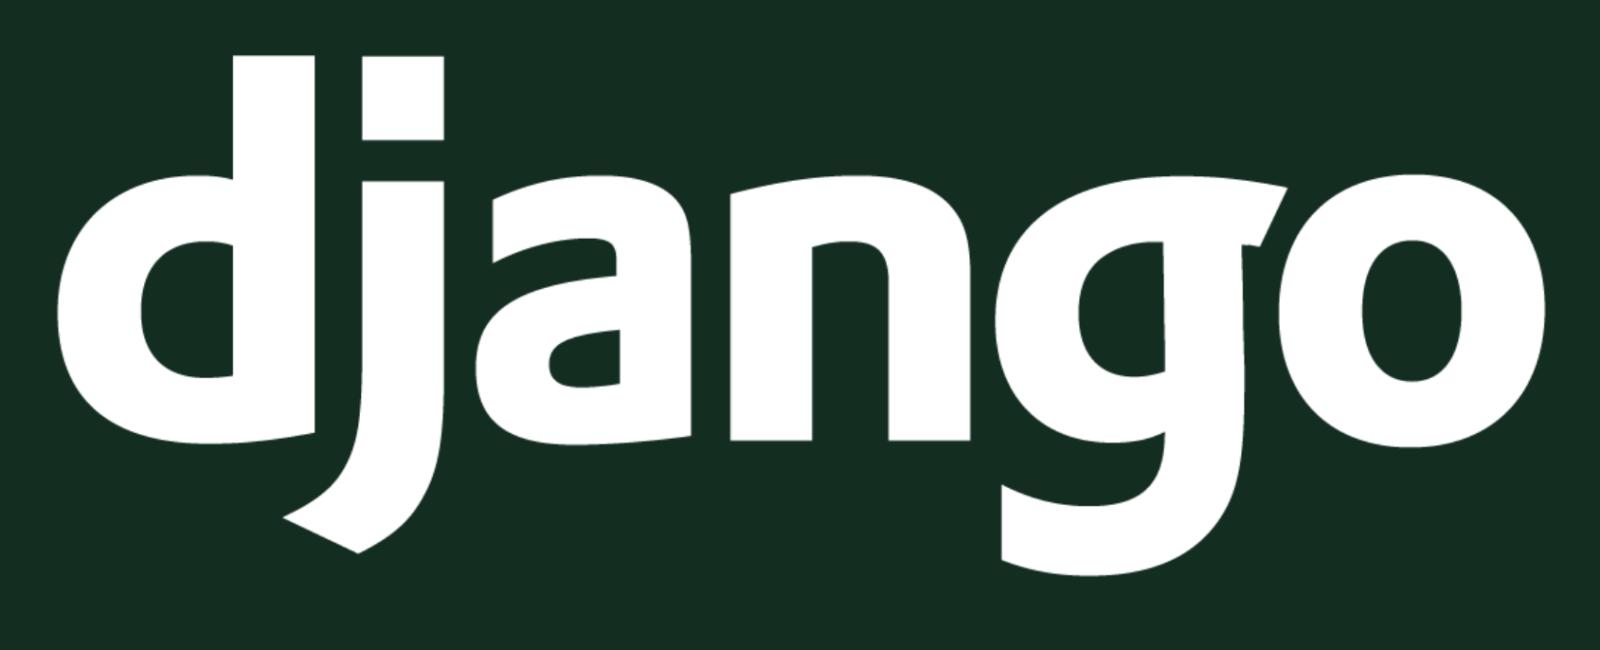 Building a simple API using Django